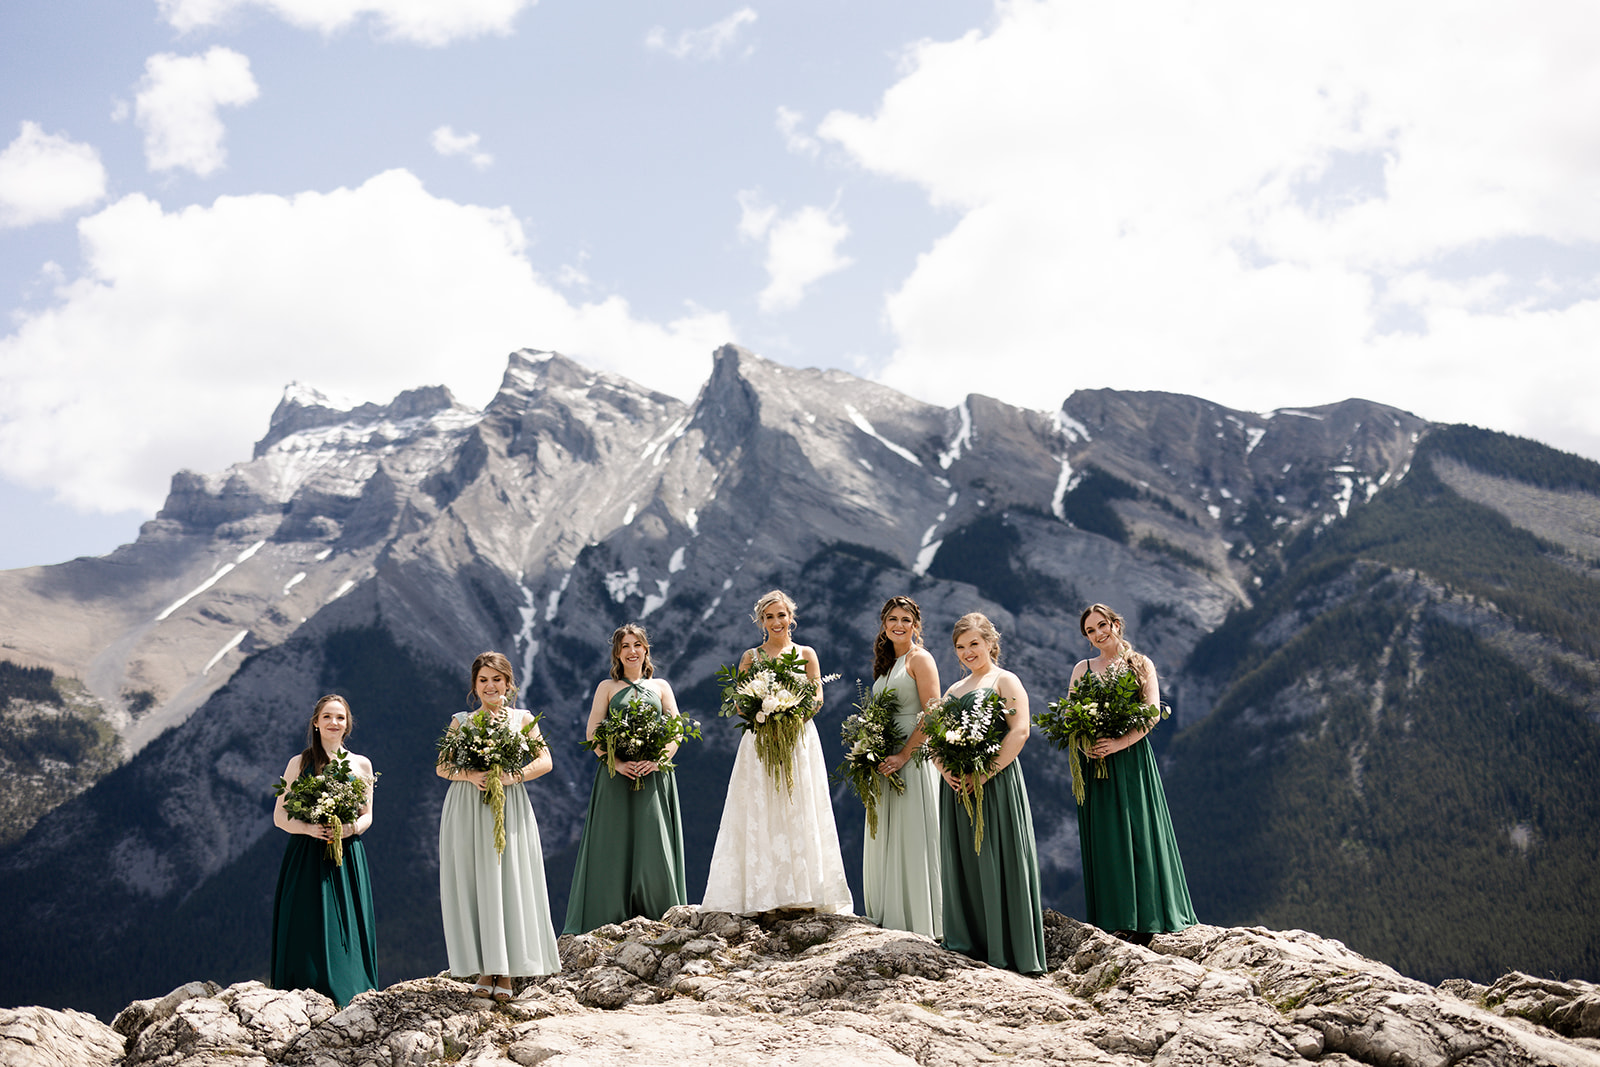 Banff wedding photographer capture wedding party